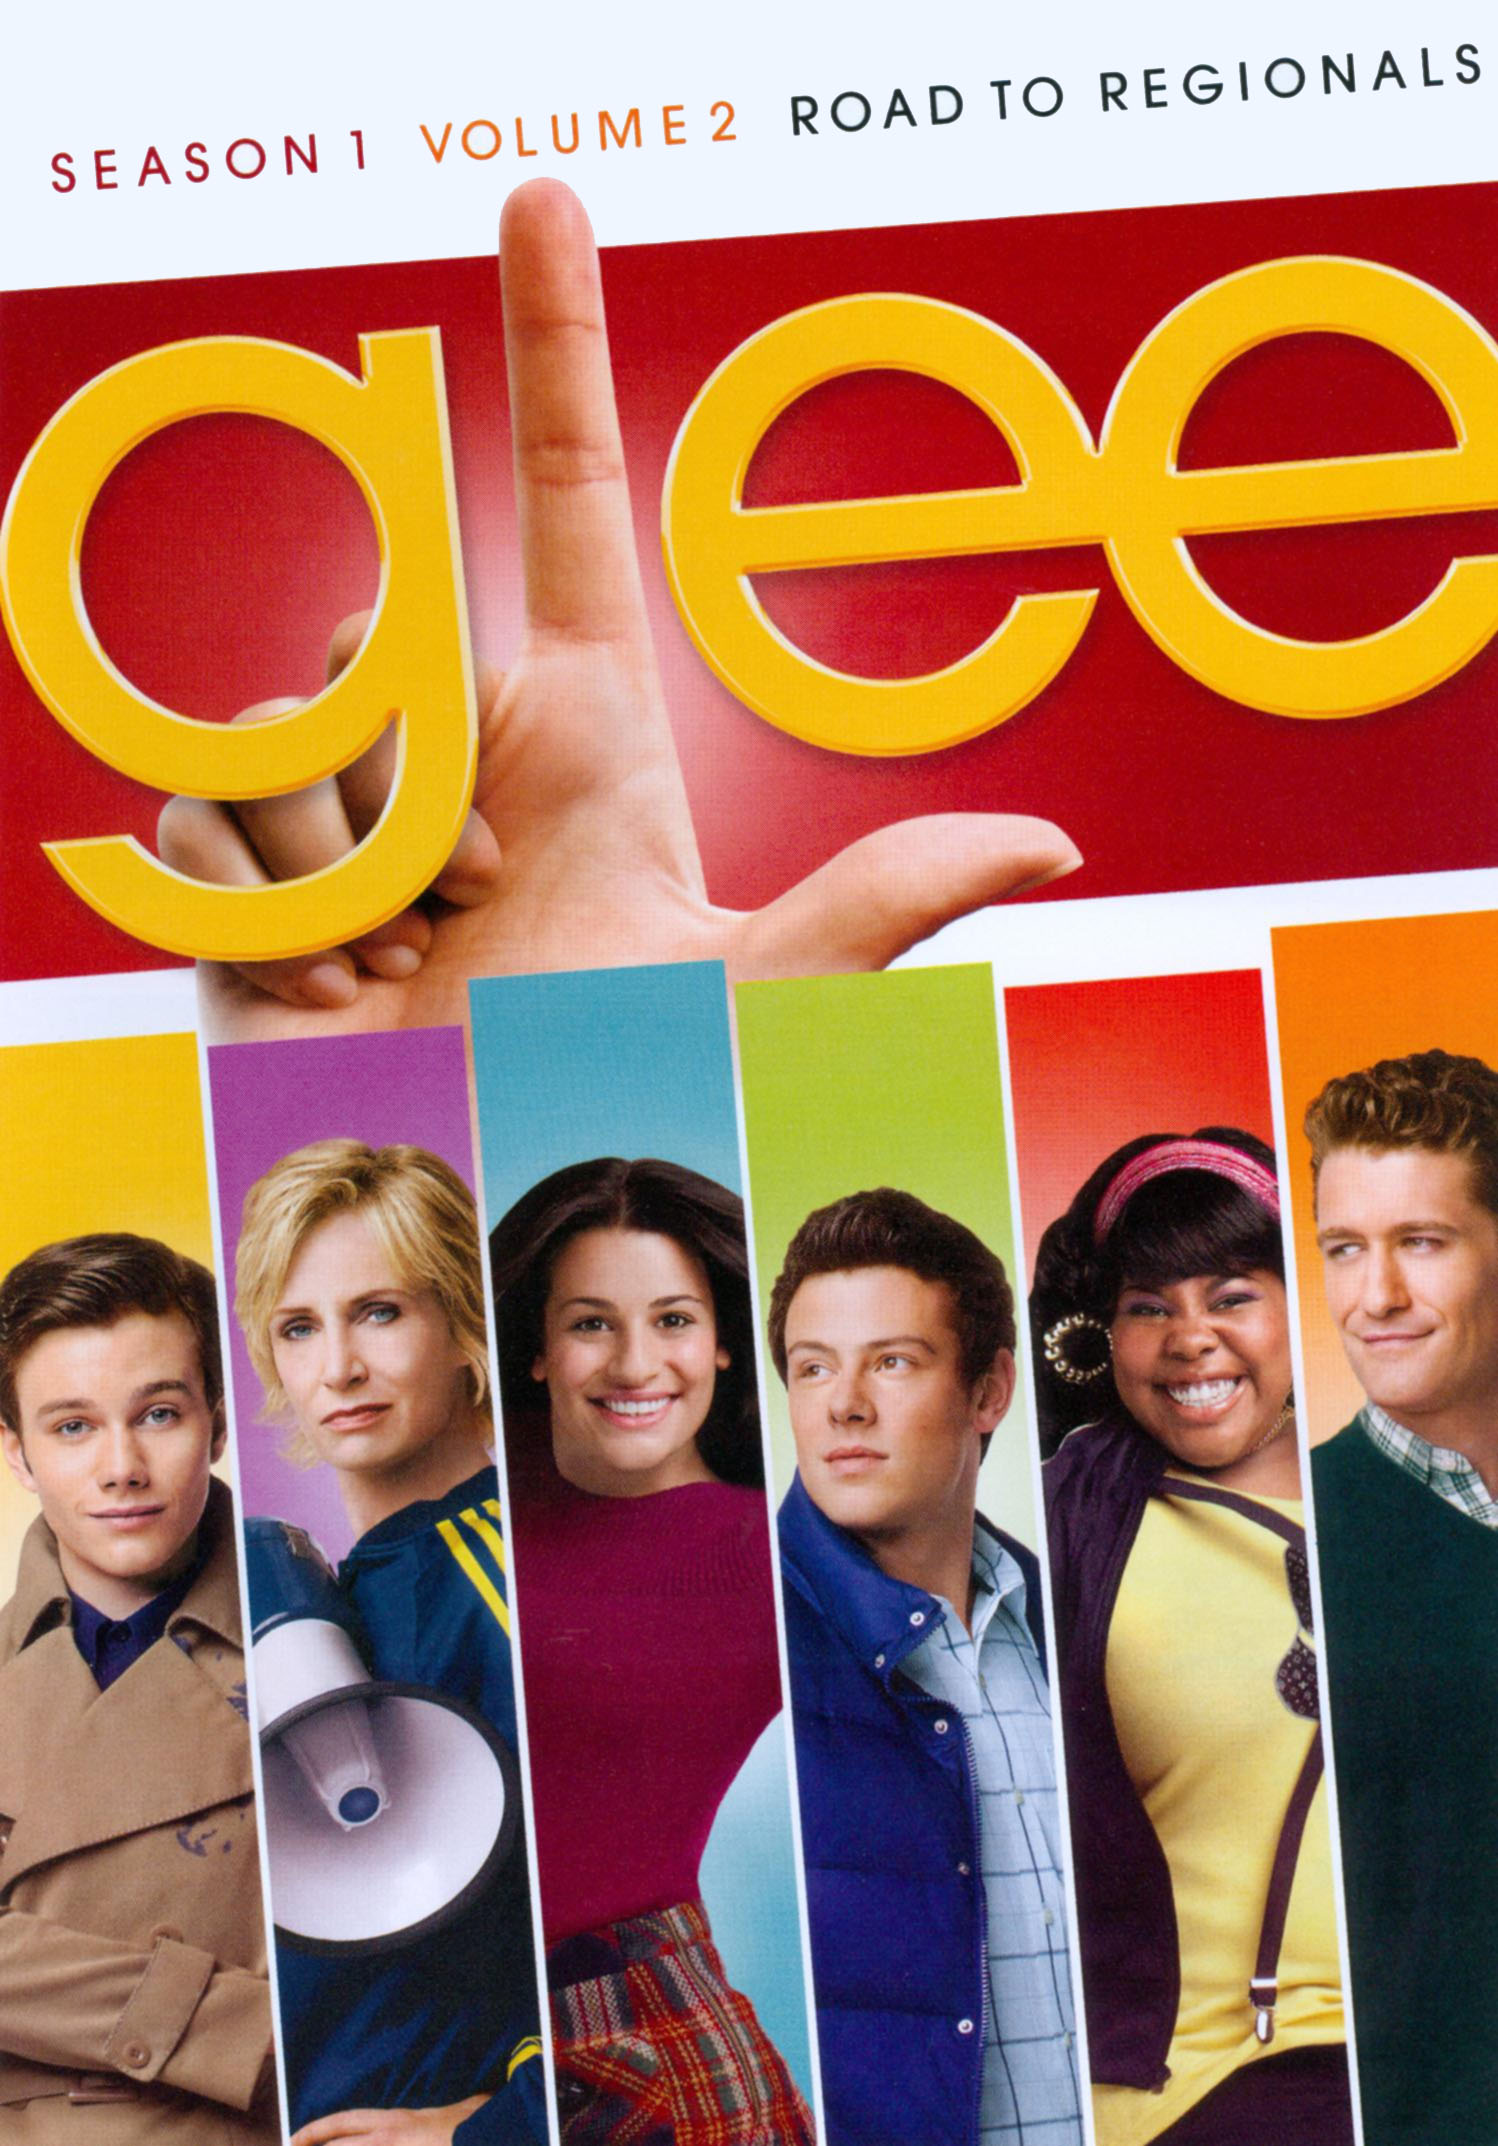 Best Buy Glee Season 1 Vol 2 Road To Regionals 3 Discs Dvd